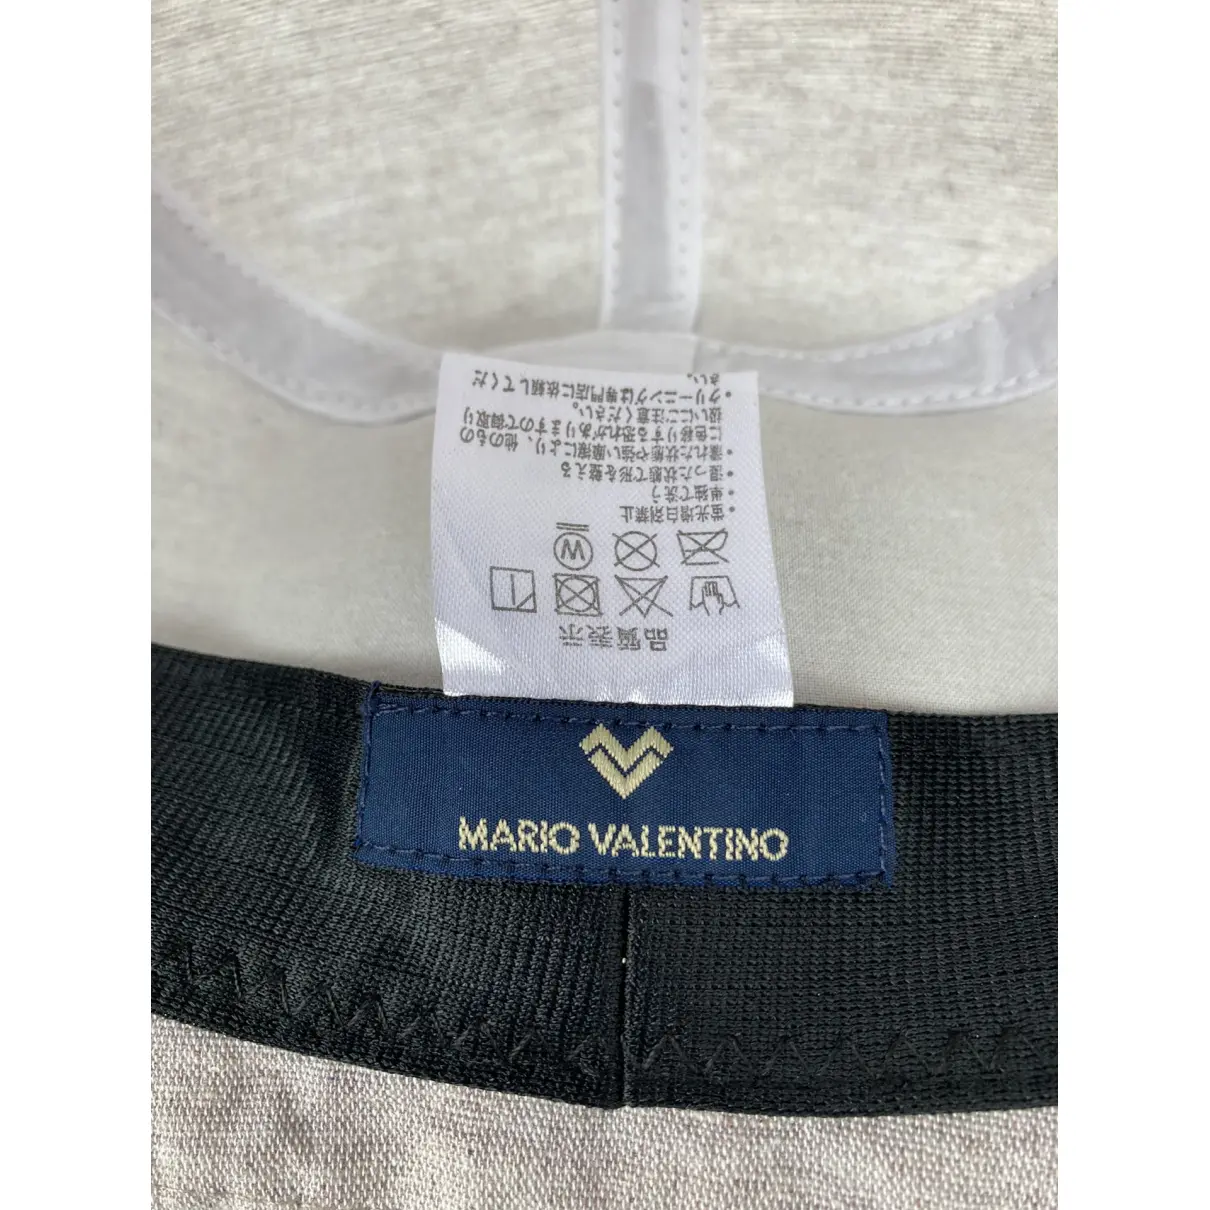 Buy MARIO VALENTINO Linen hat online - Vintage